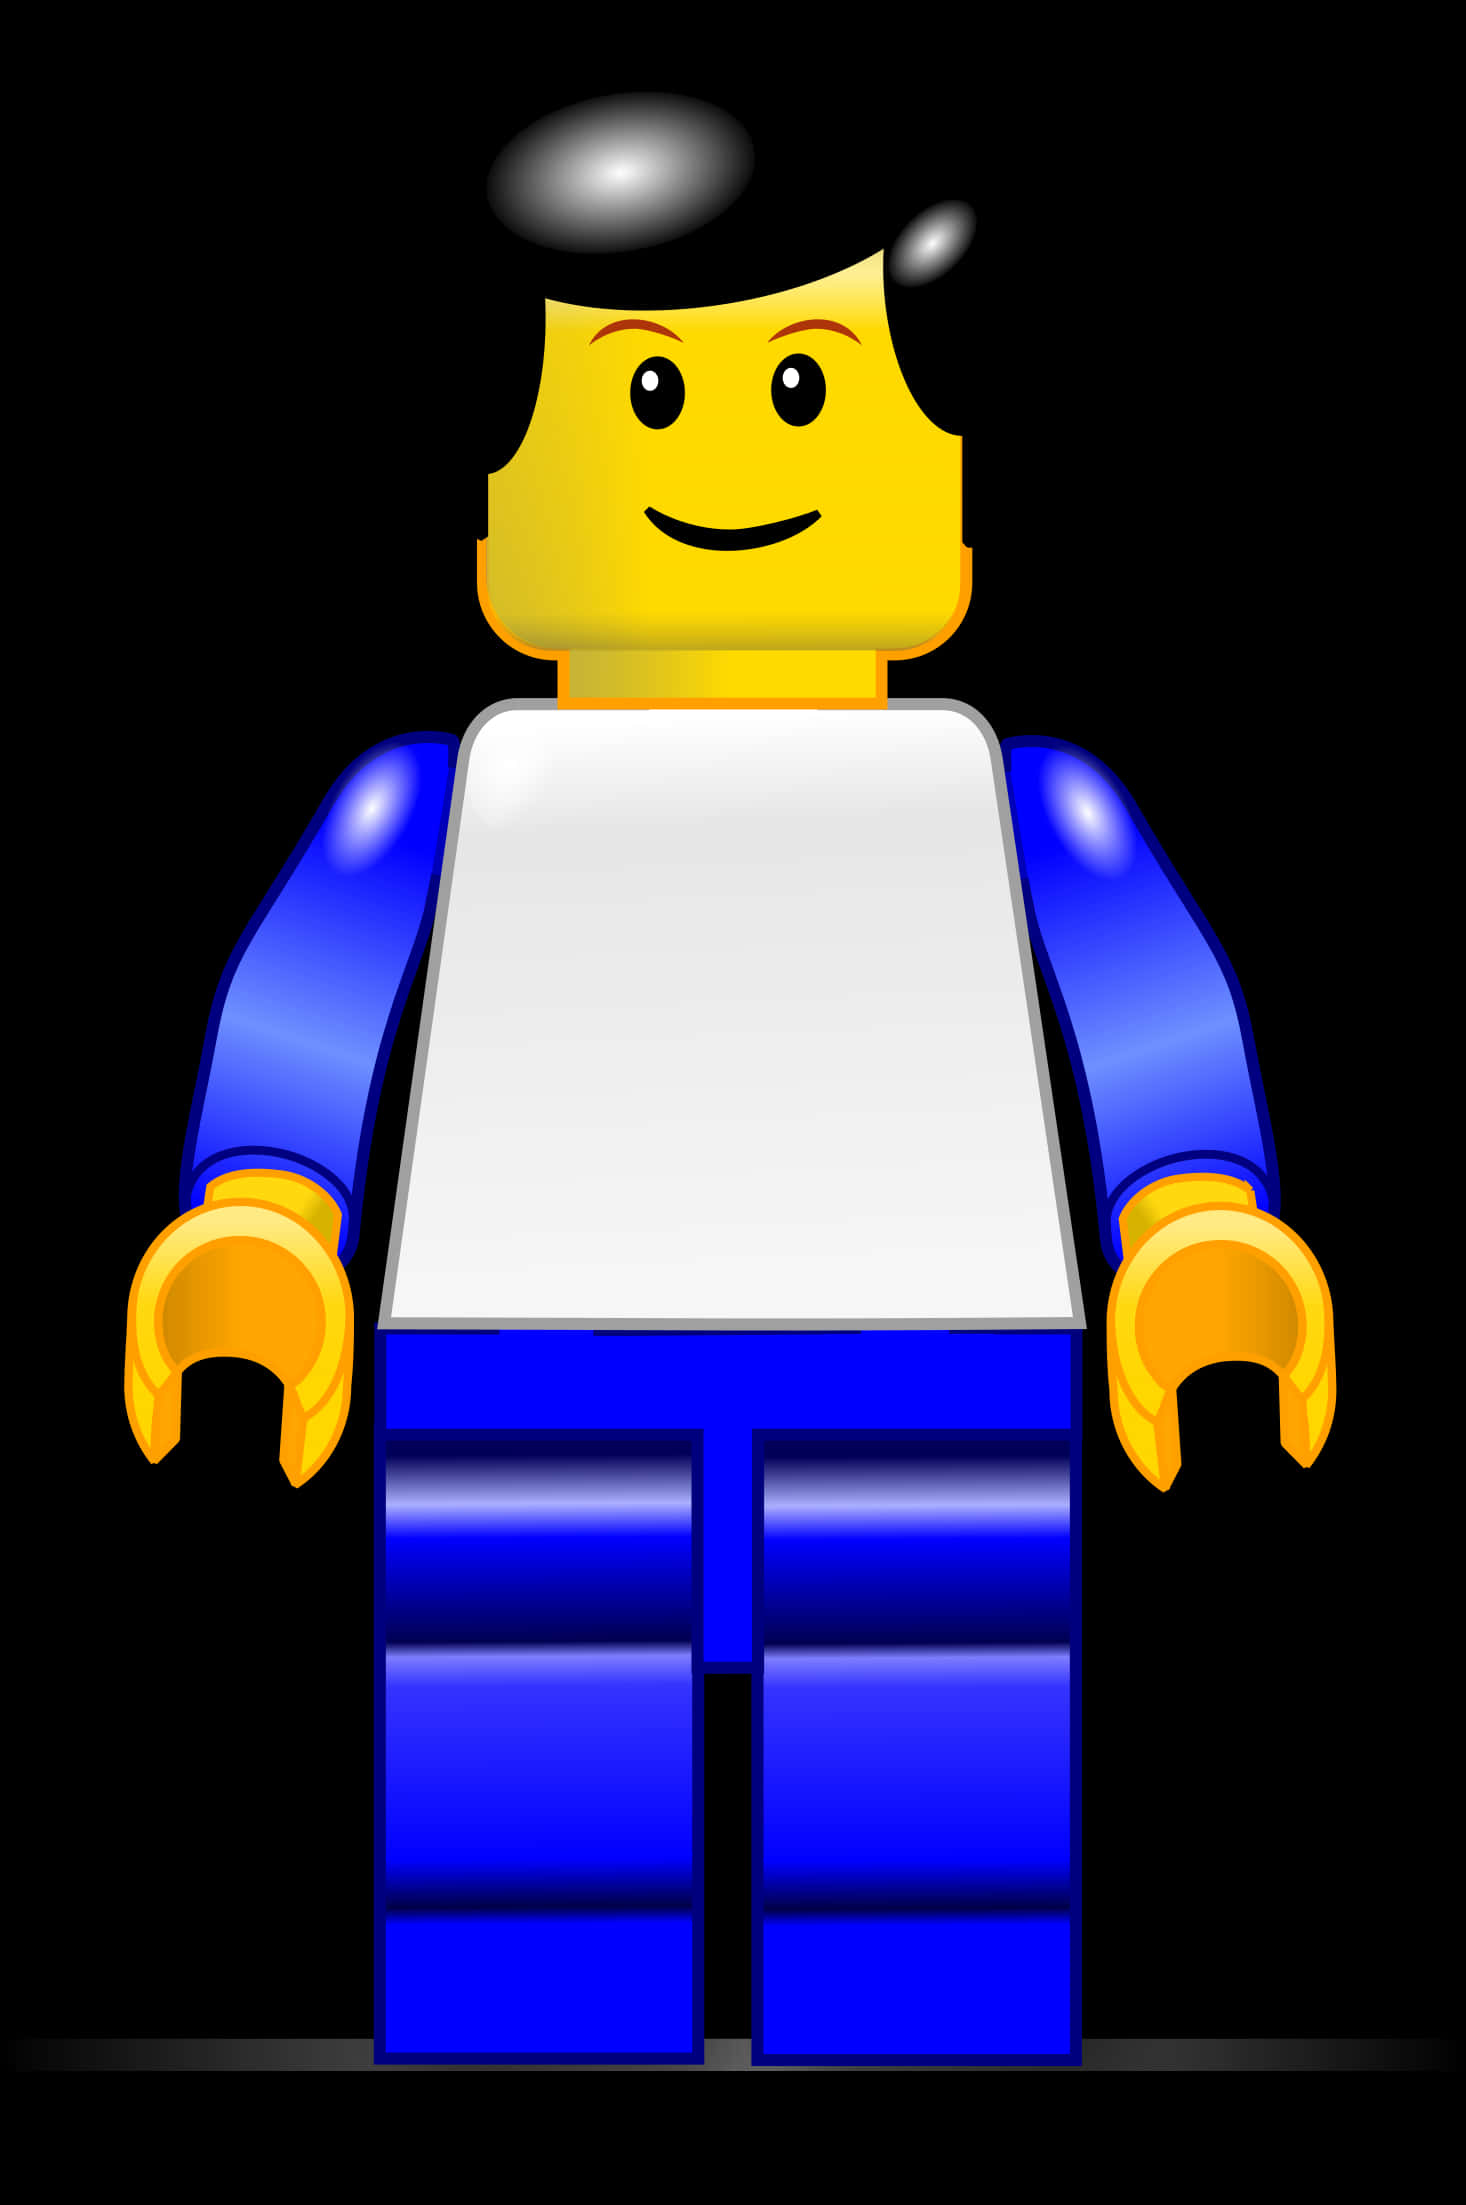 Classic Lego Figure Illustration SVG